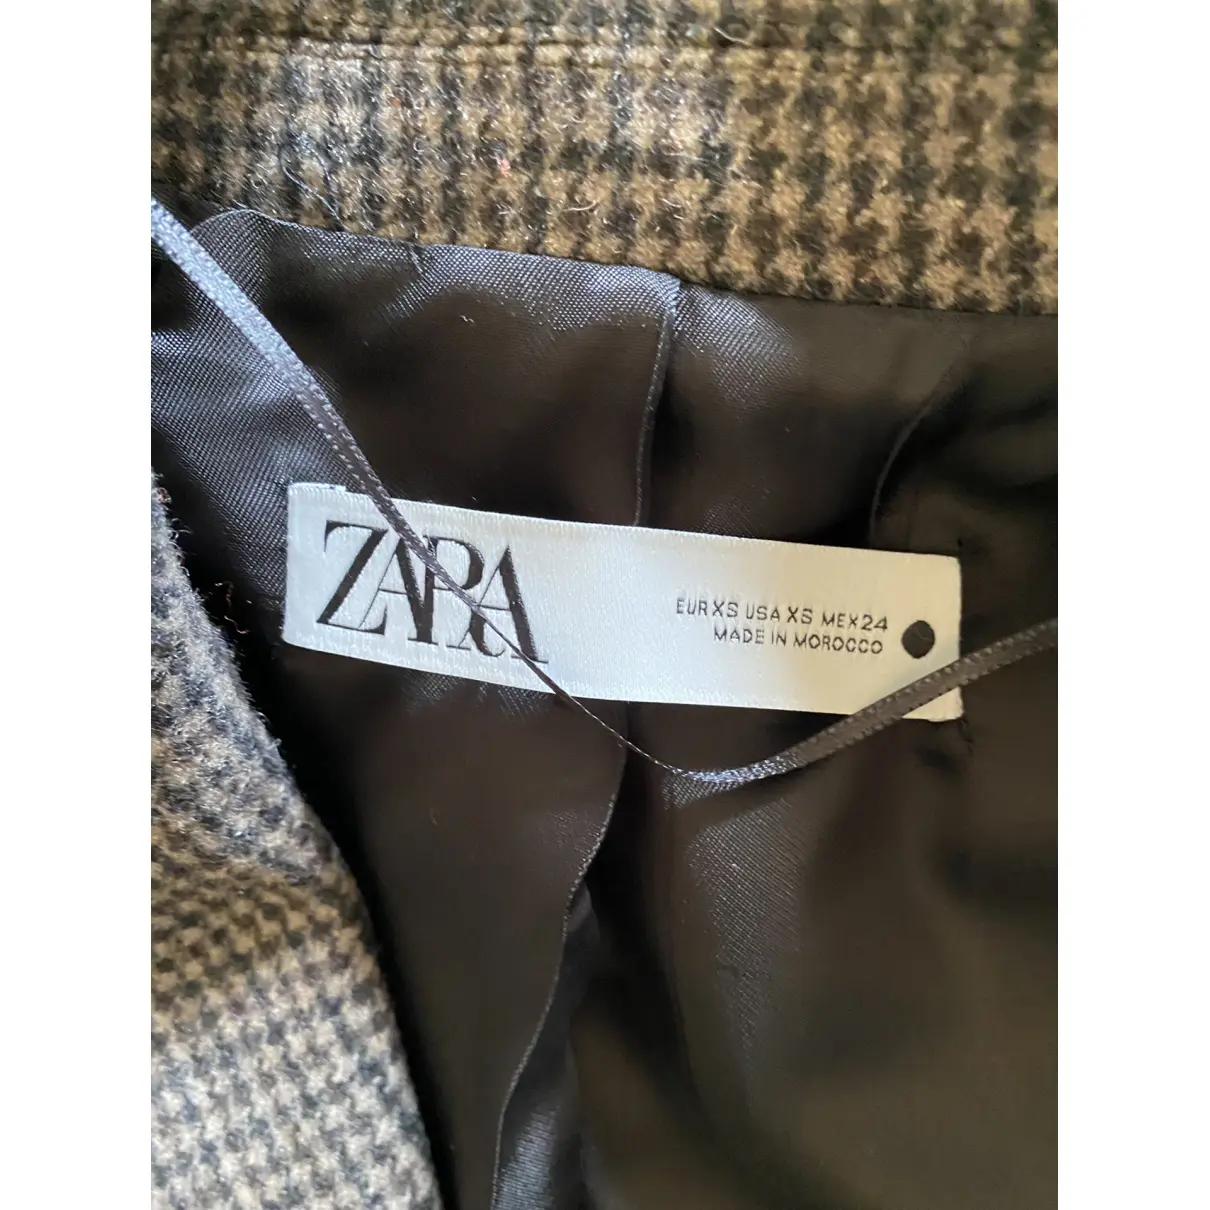 Buy Zara Wool blazer online